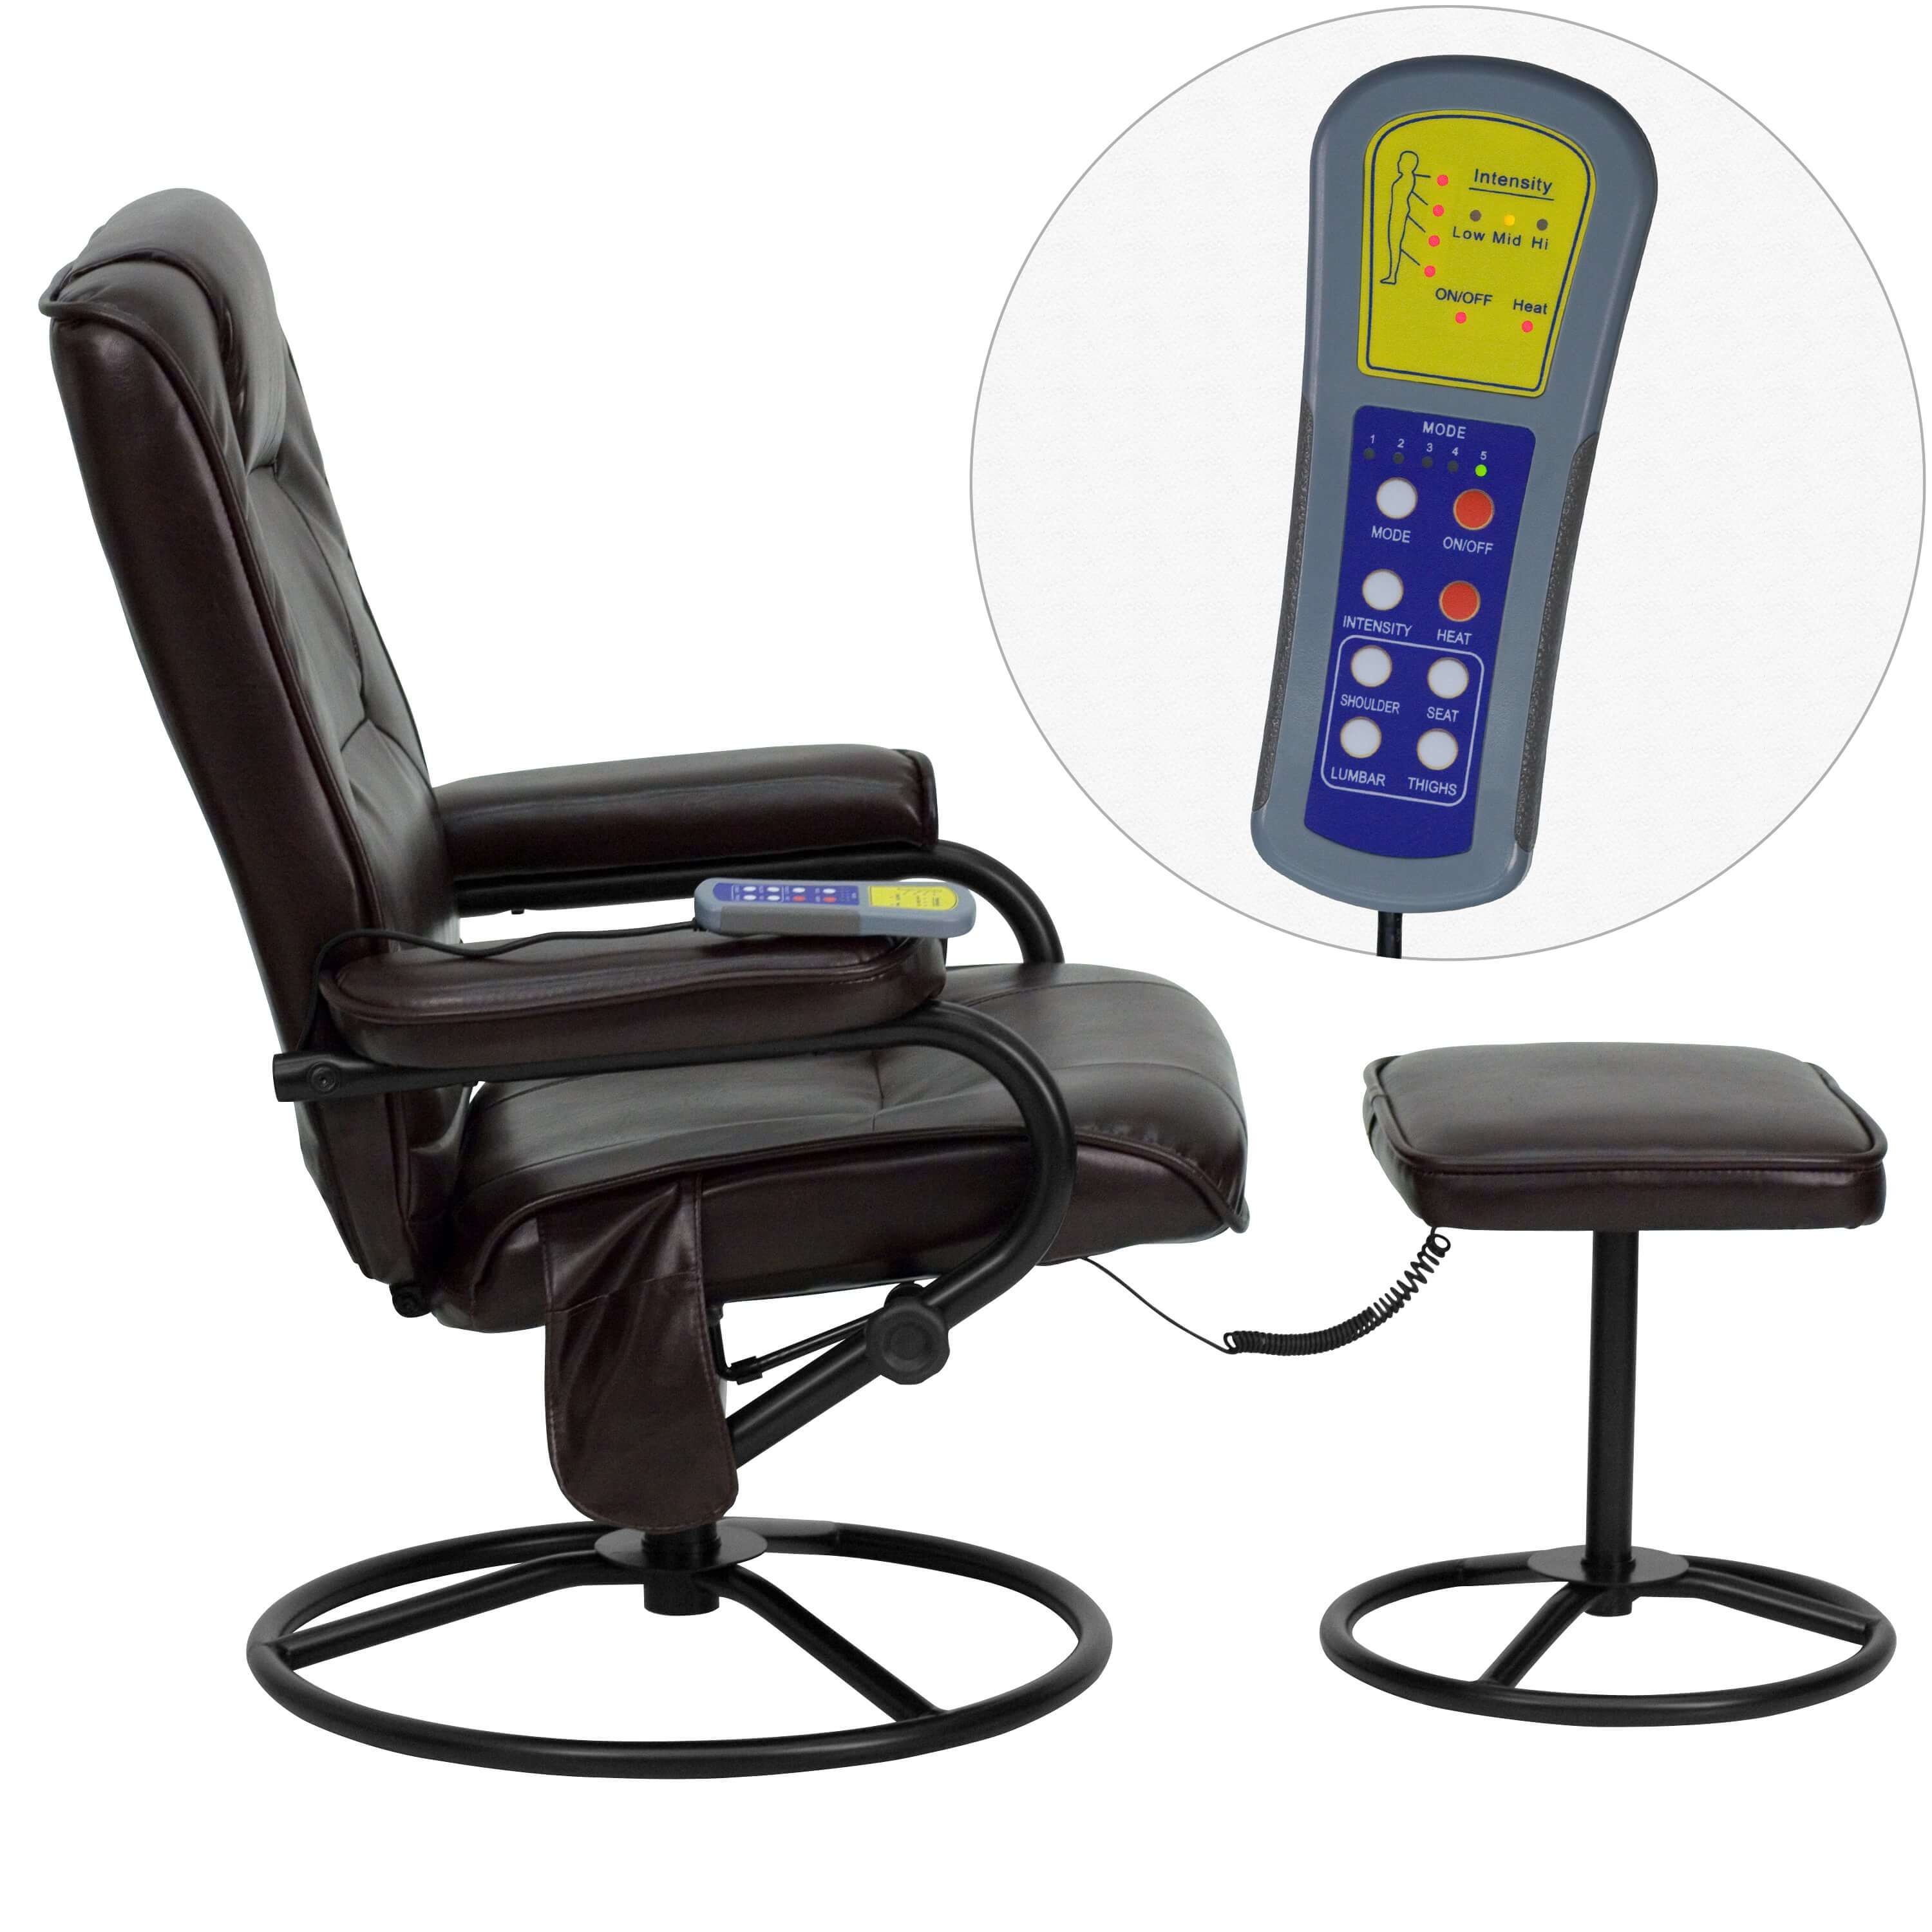 Massage chair recliner remote view